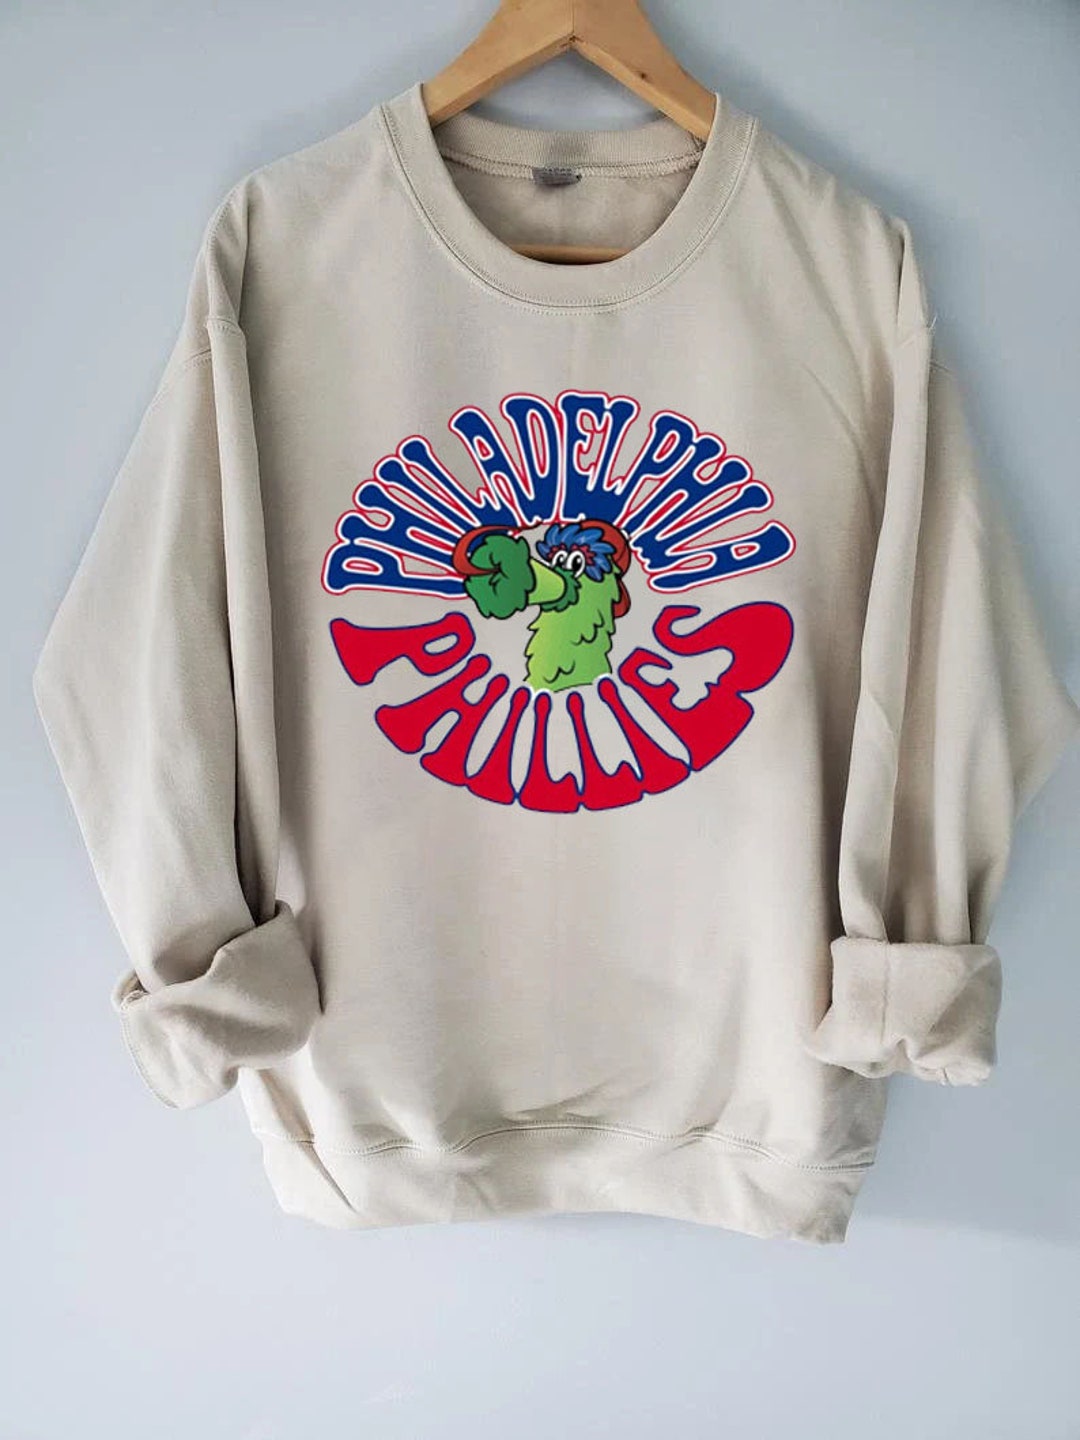 Official Phillies phanatic cartoon baseball T-shirt, hoodie, tank top,  sweater and long sleeve t-shirt